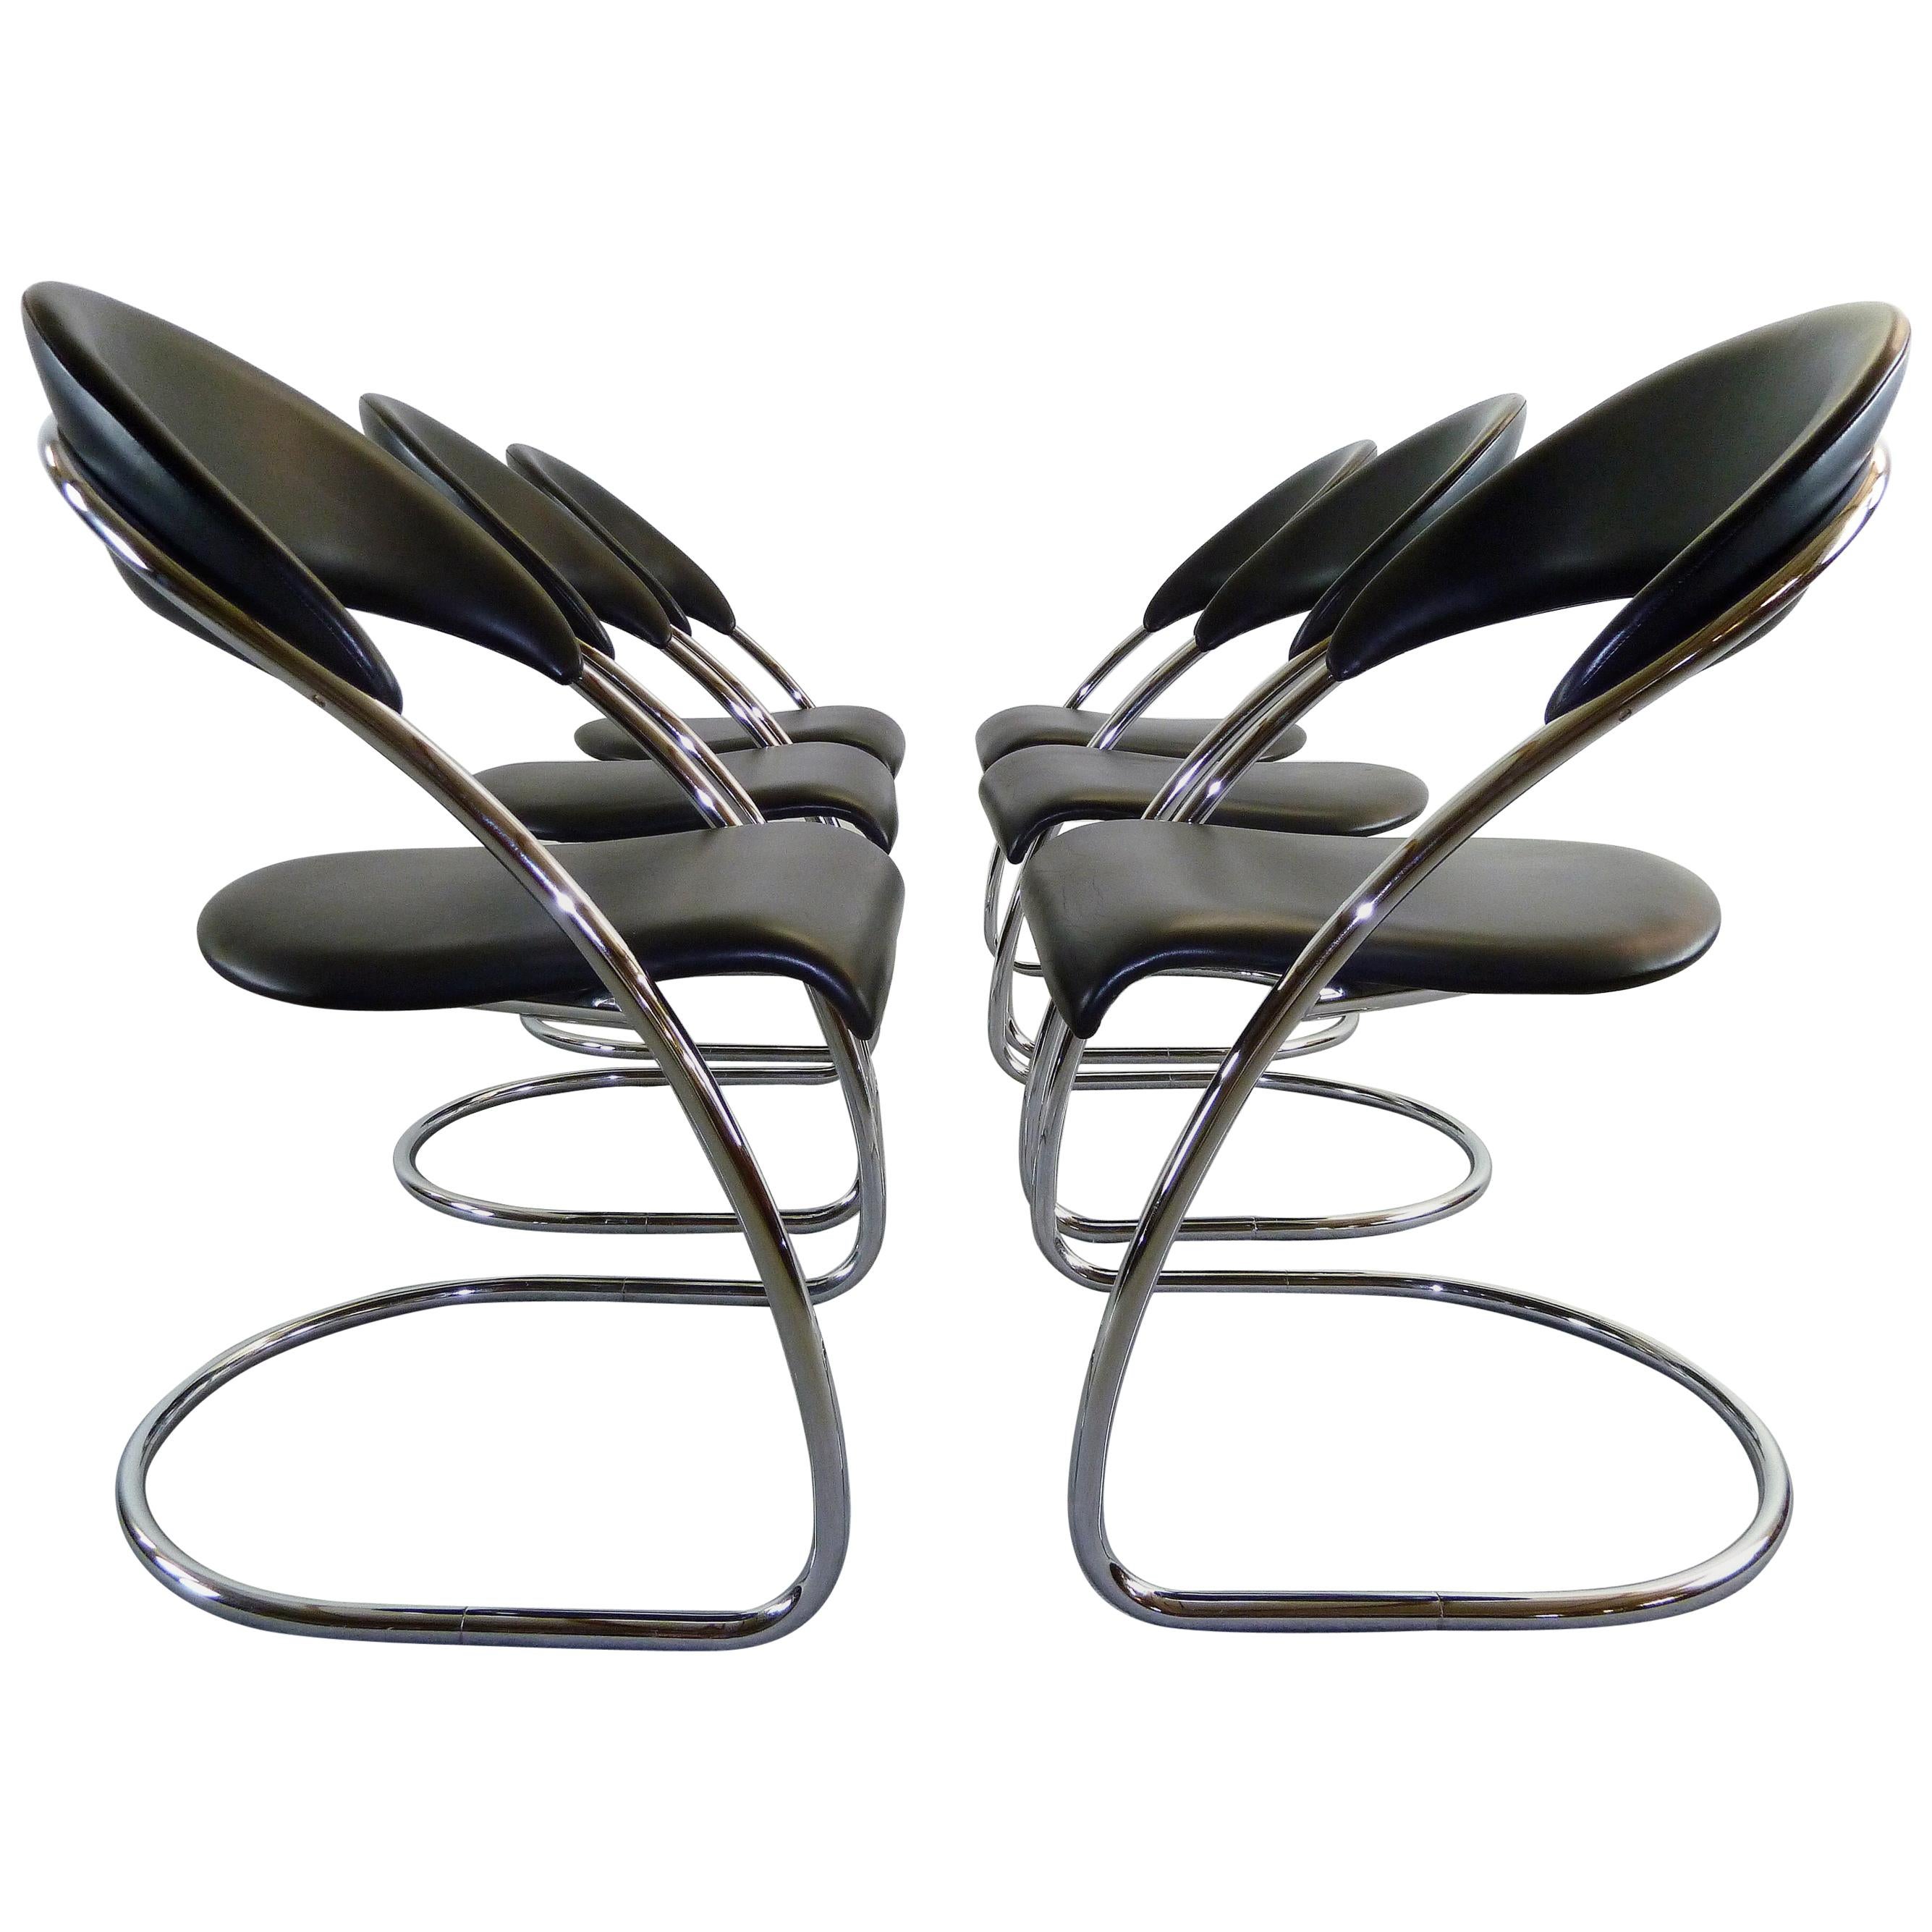 Set of 6 Cantilevered Chairs Thonet Bauhaus Model ST14 Hans Luckhardt For Sale